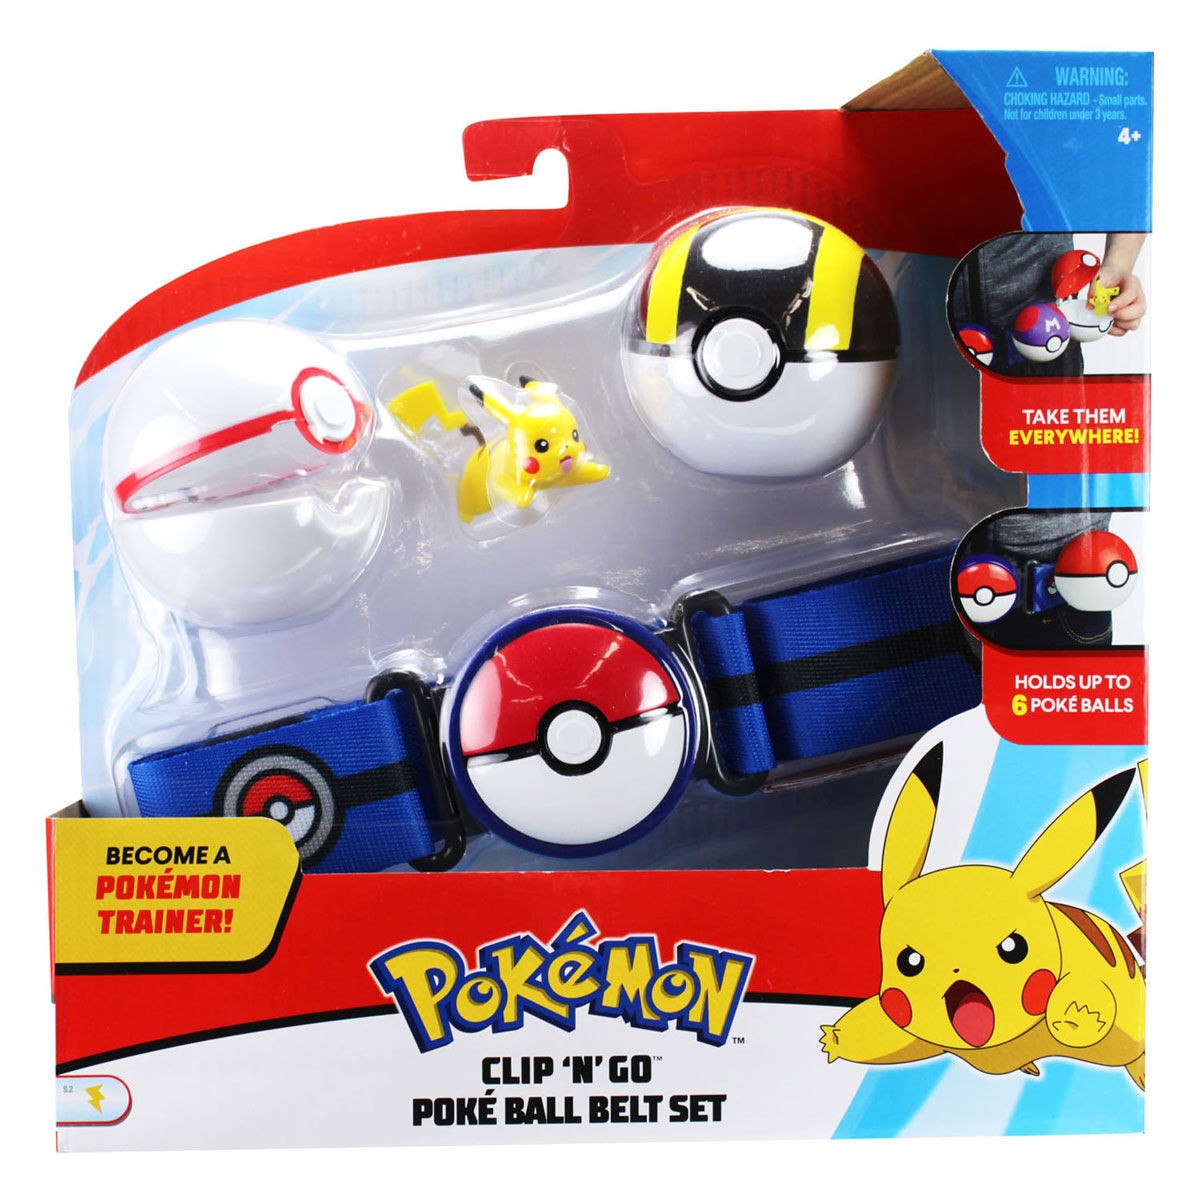 Pokémon Clip 'N' Go Poke Ball with Blue Belt Playset, 4 pieces